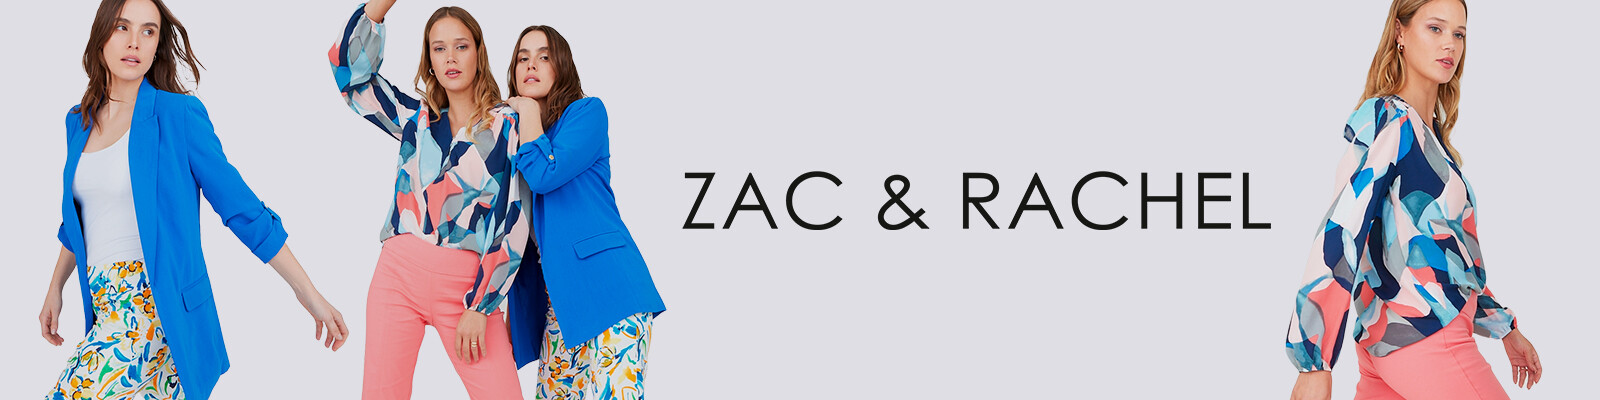 Zac & Rachel